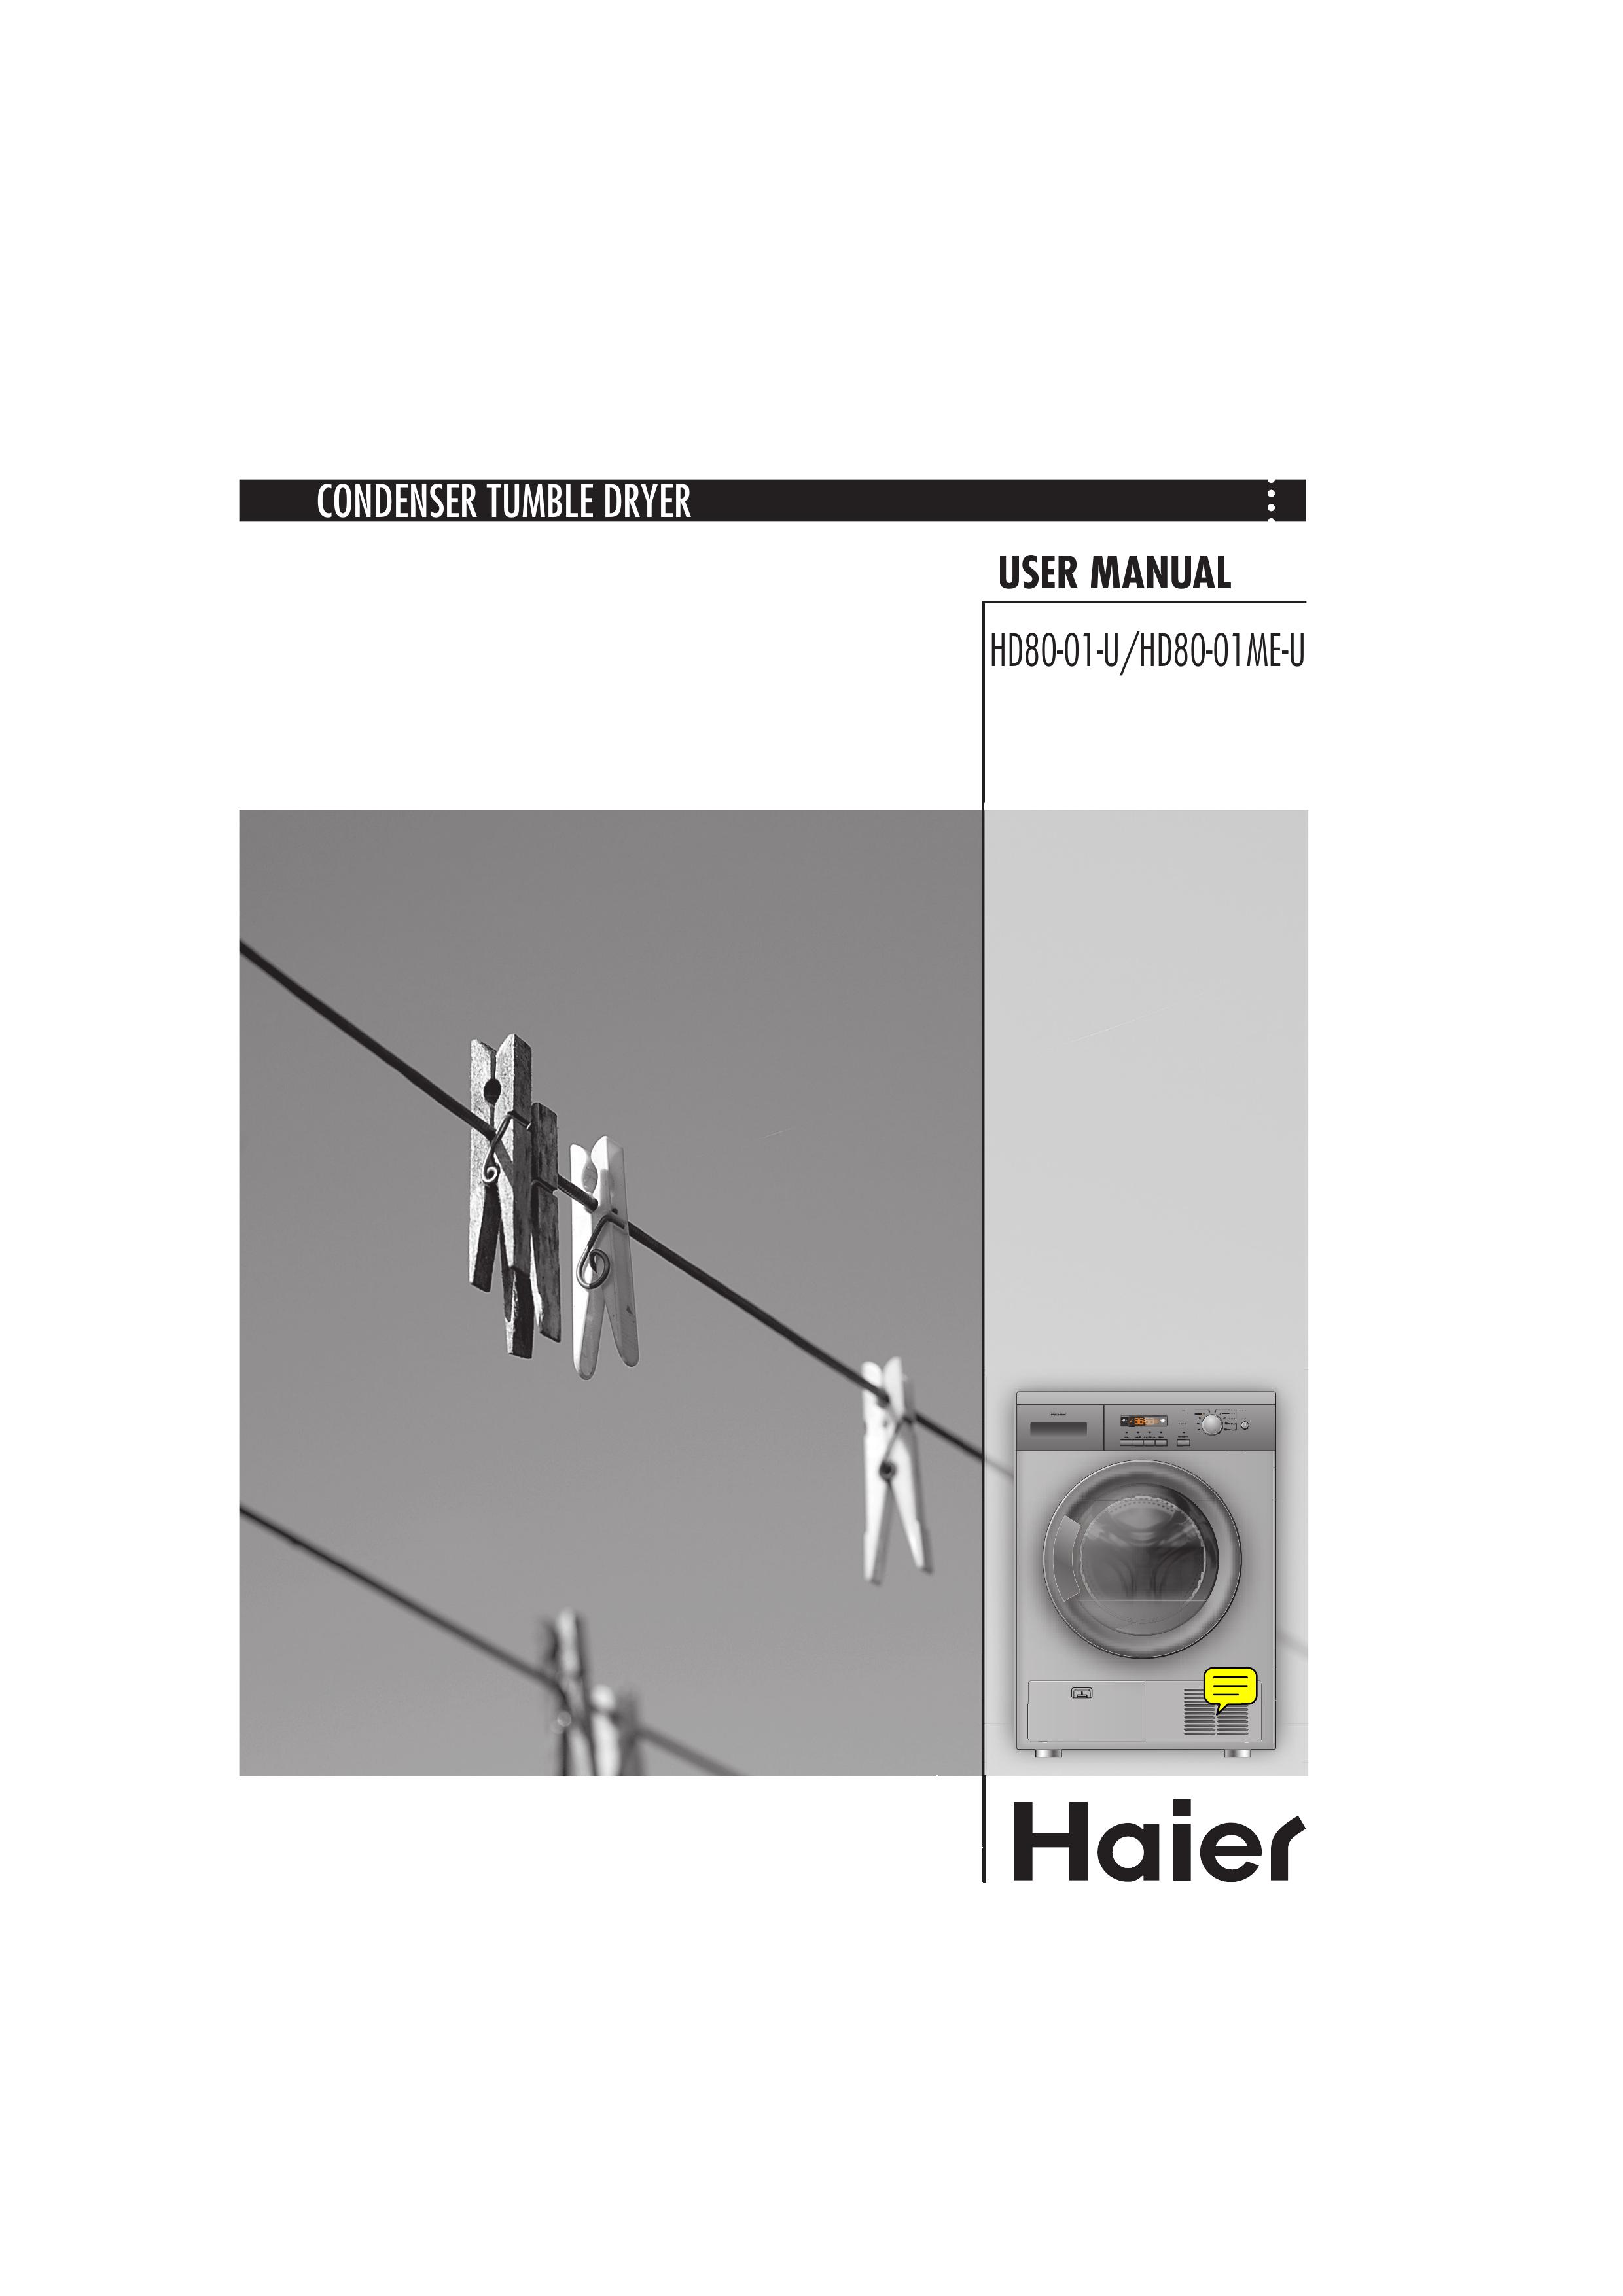 Haier HD80-01ME-U Clothes Dryer User Manual